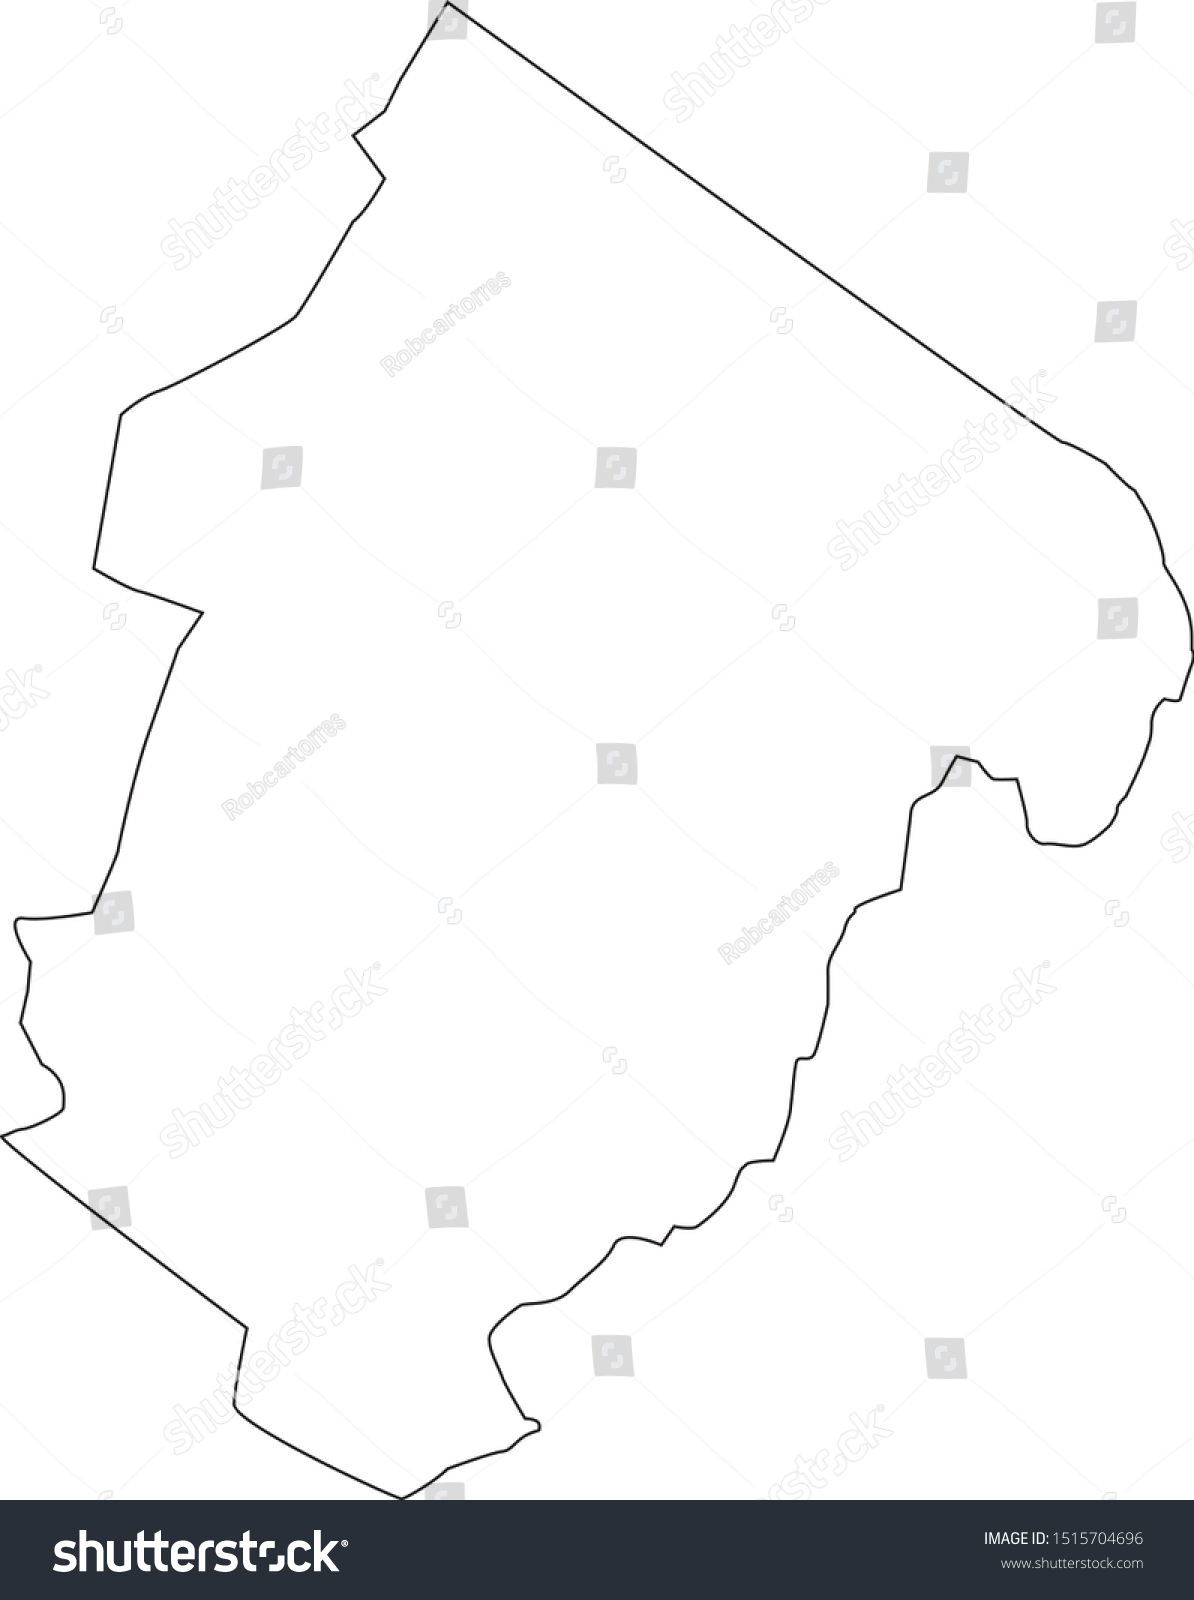 Stock Vector Rockbridge County Map In State Of Virginia 1515704696 